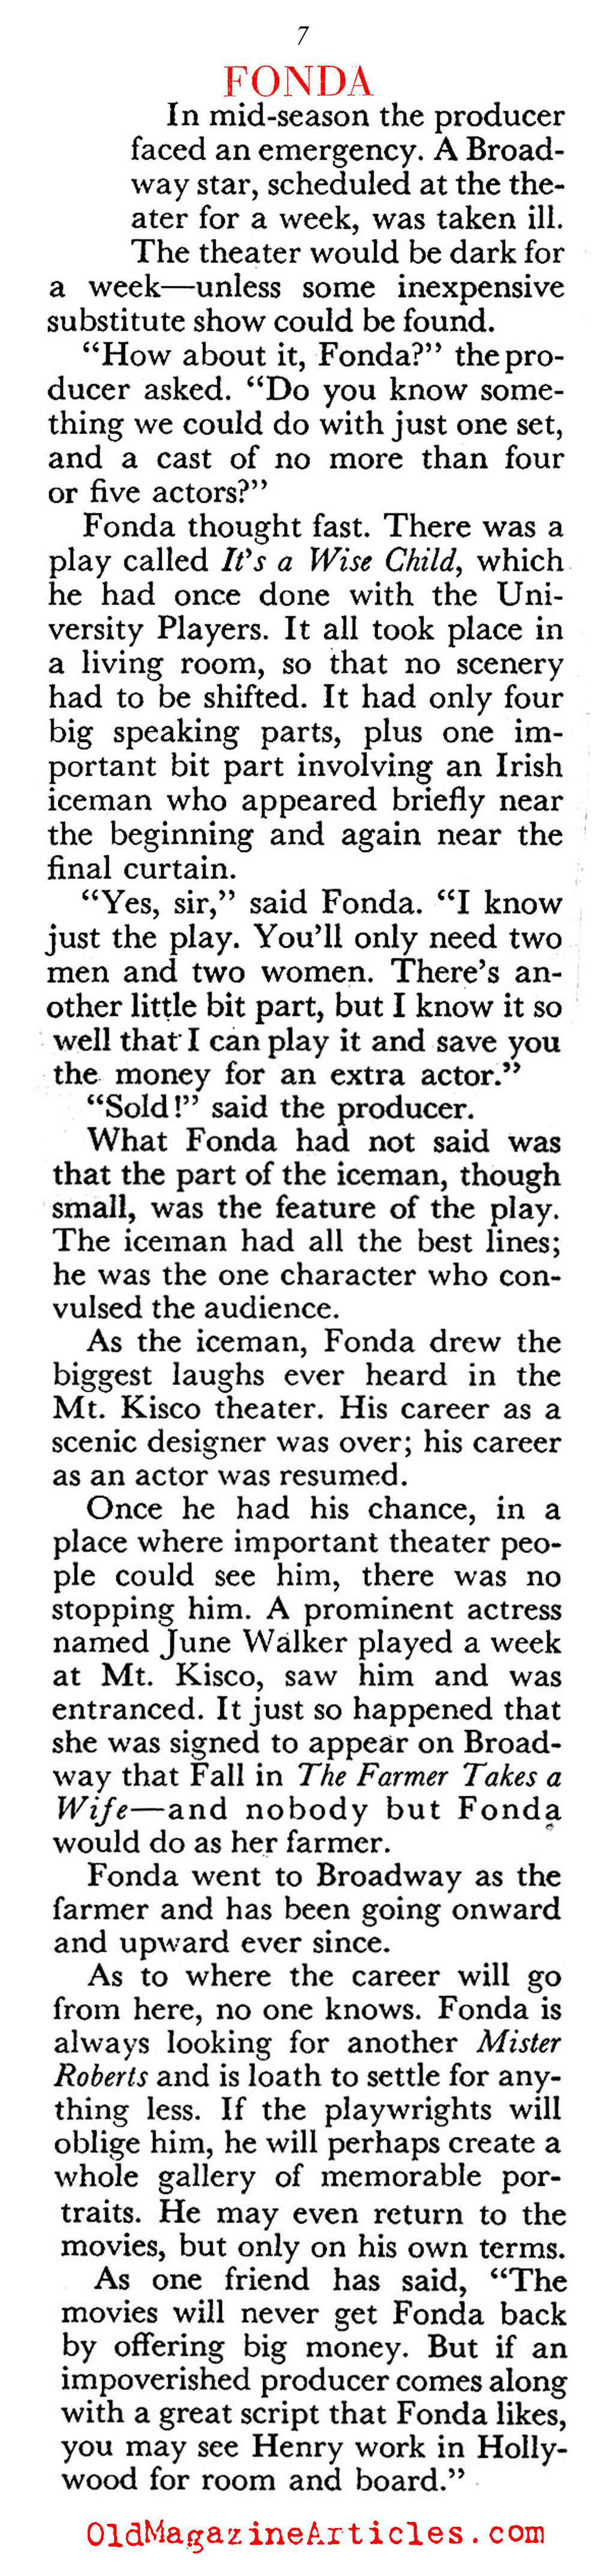 The Unusual Case of Henry Fonda (Coronet Magazine, 1953)